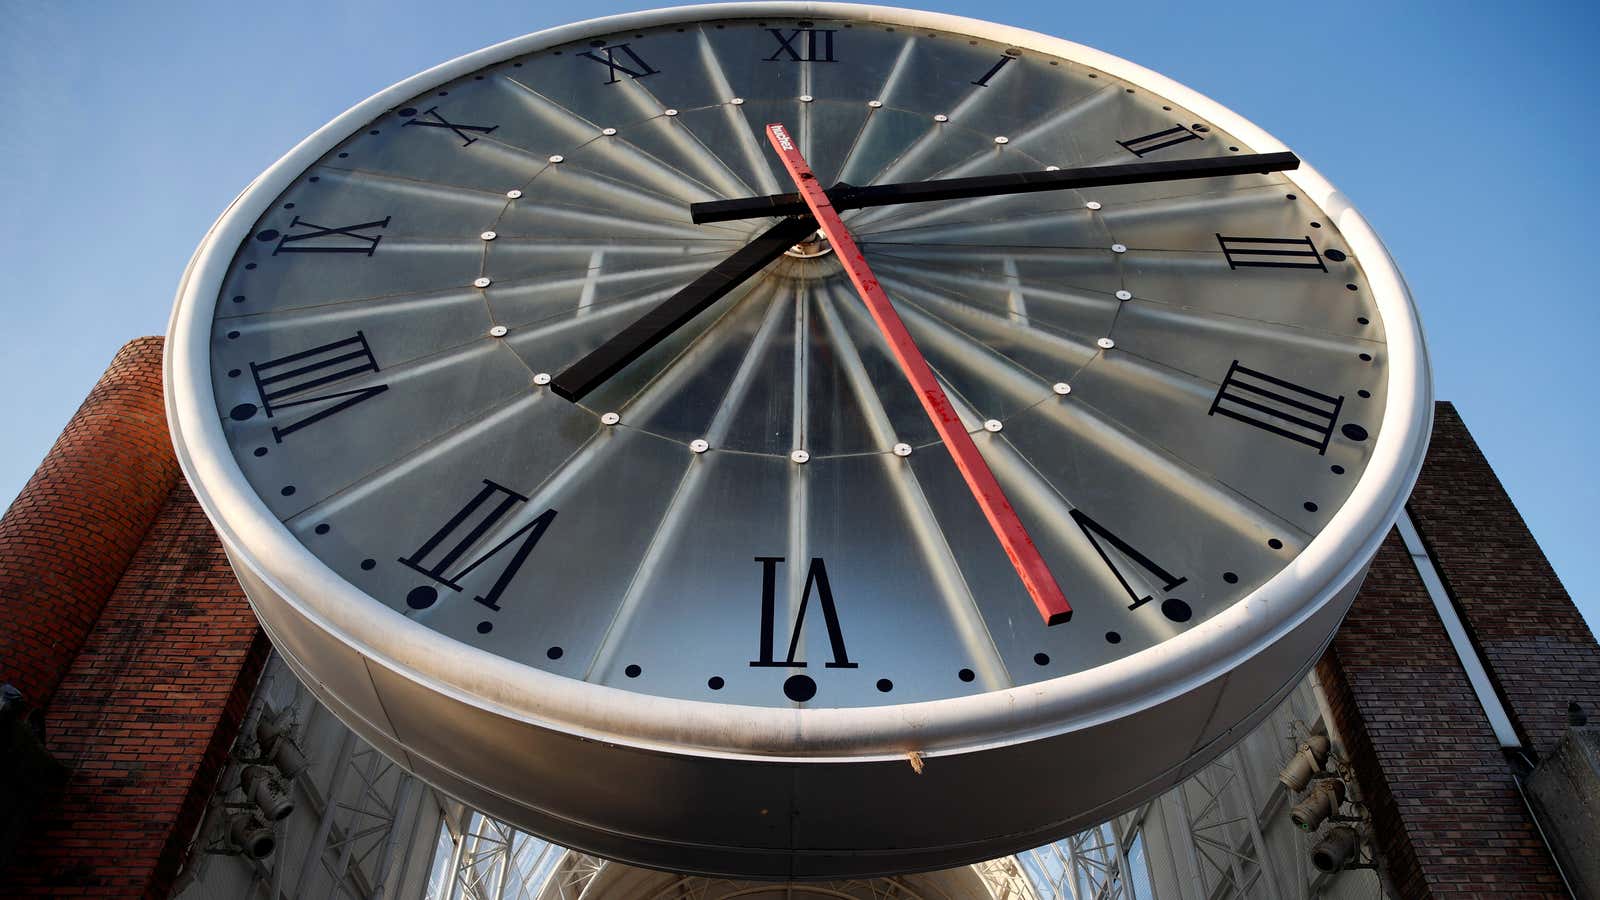 A giant clock is seen over the entrance of Cergy-Saint-Christophe railway station in Cergy, near Paris, France.